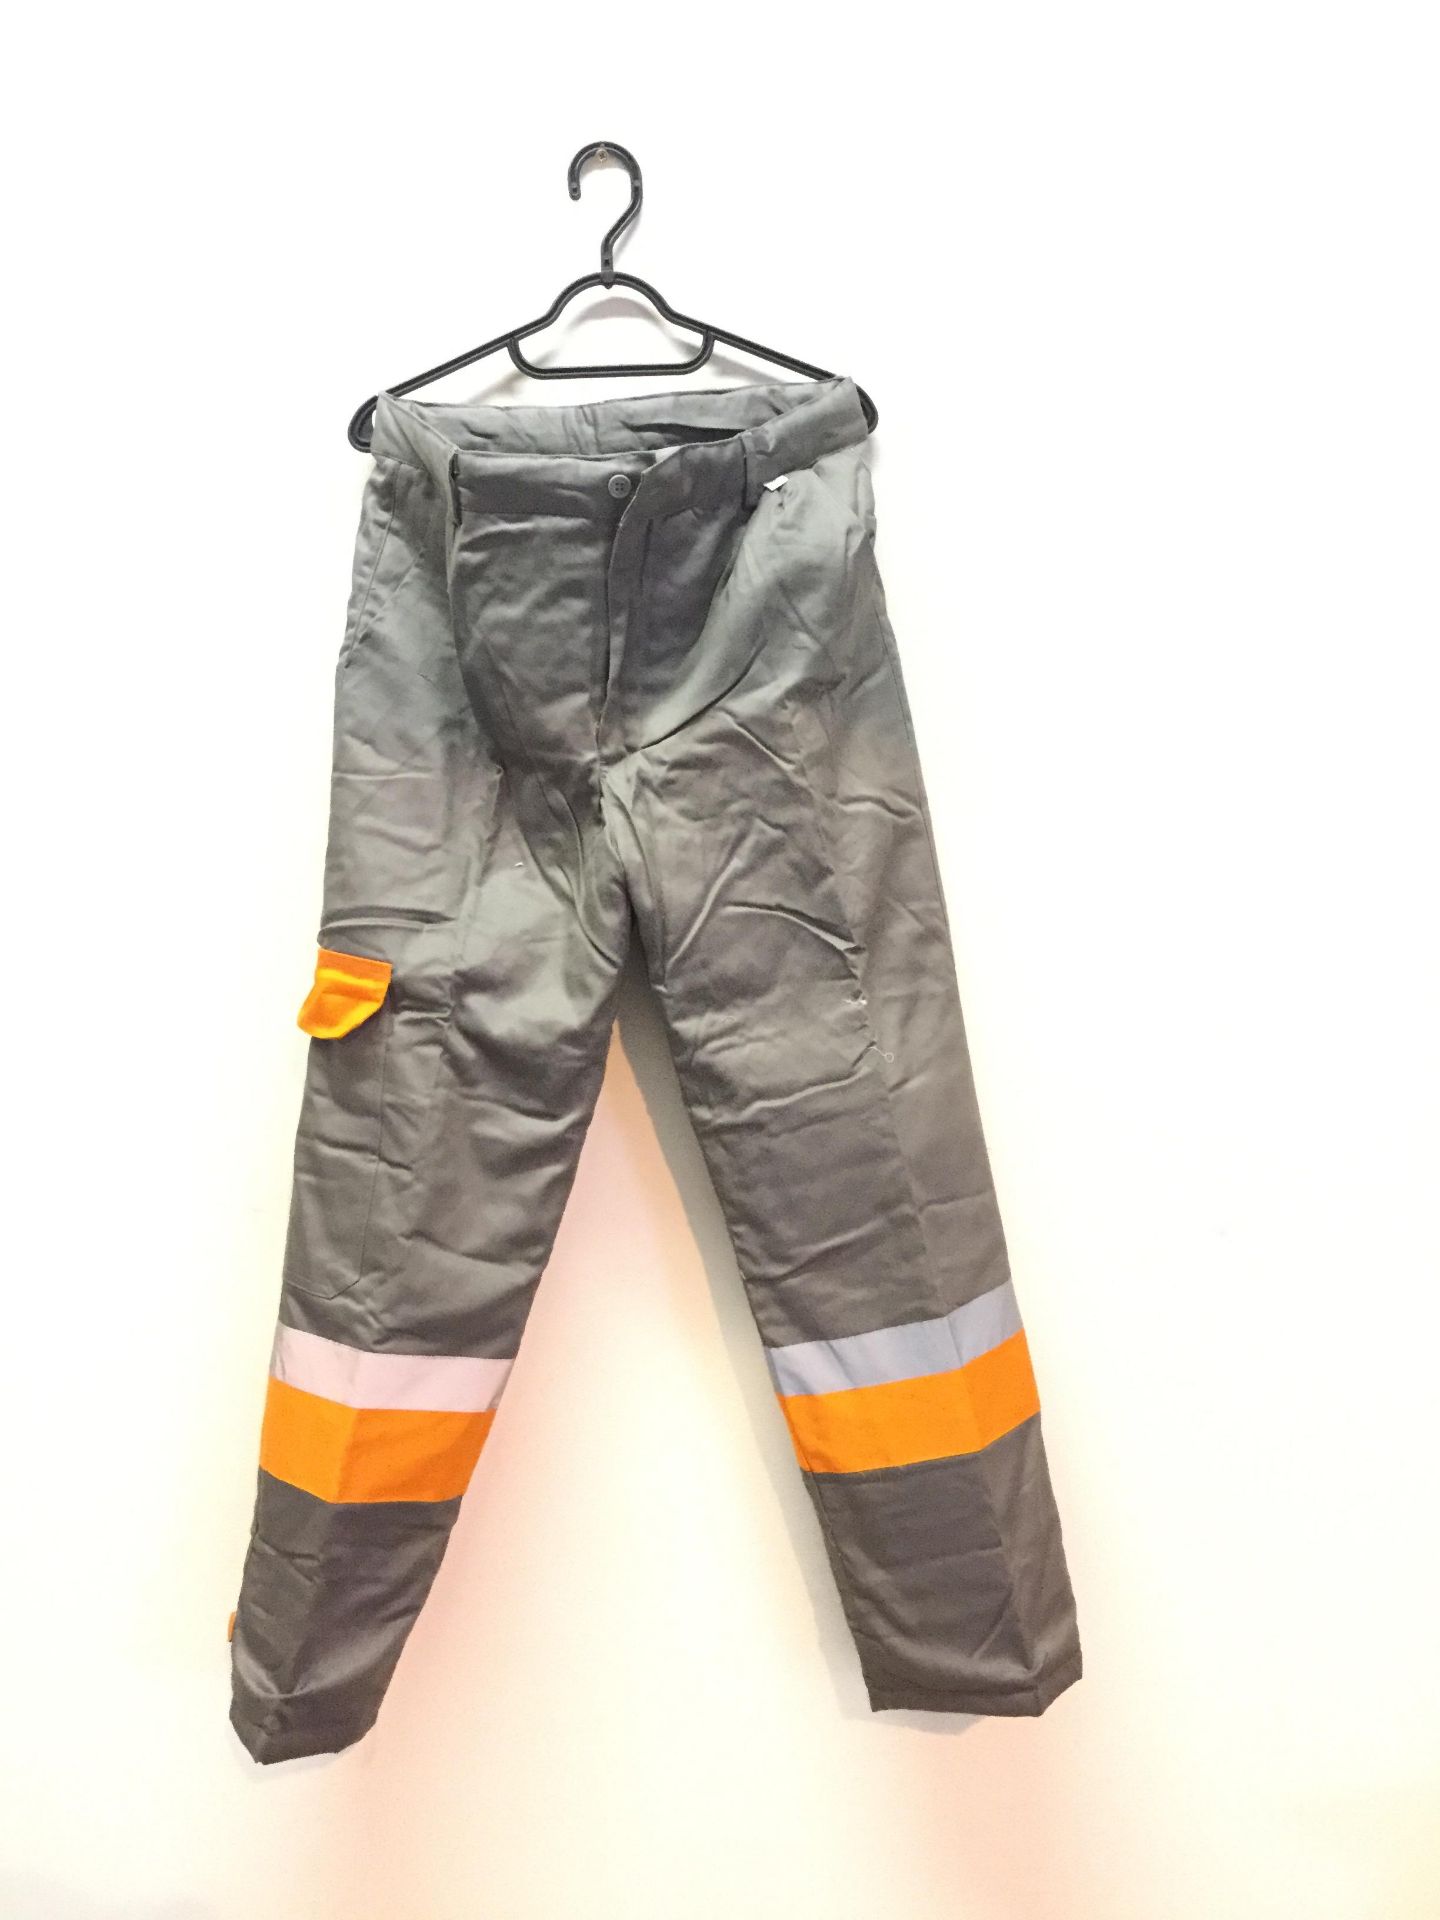 Flame Retardant Winter Trousers - Size 50